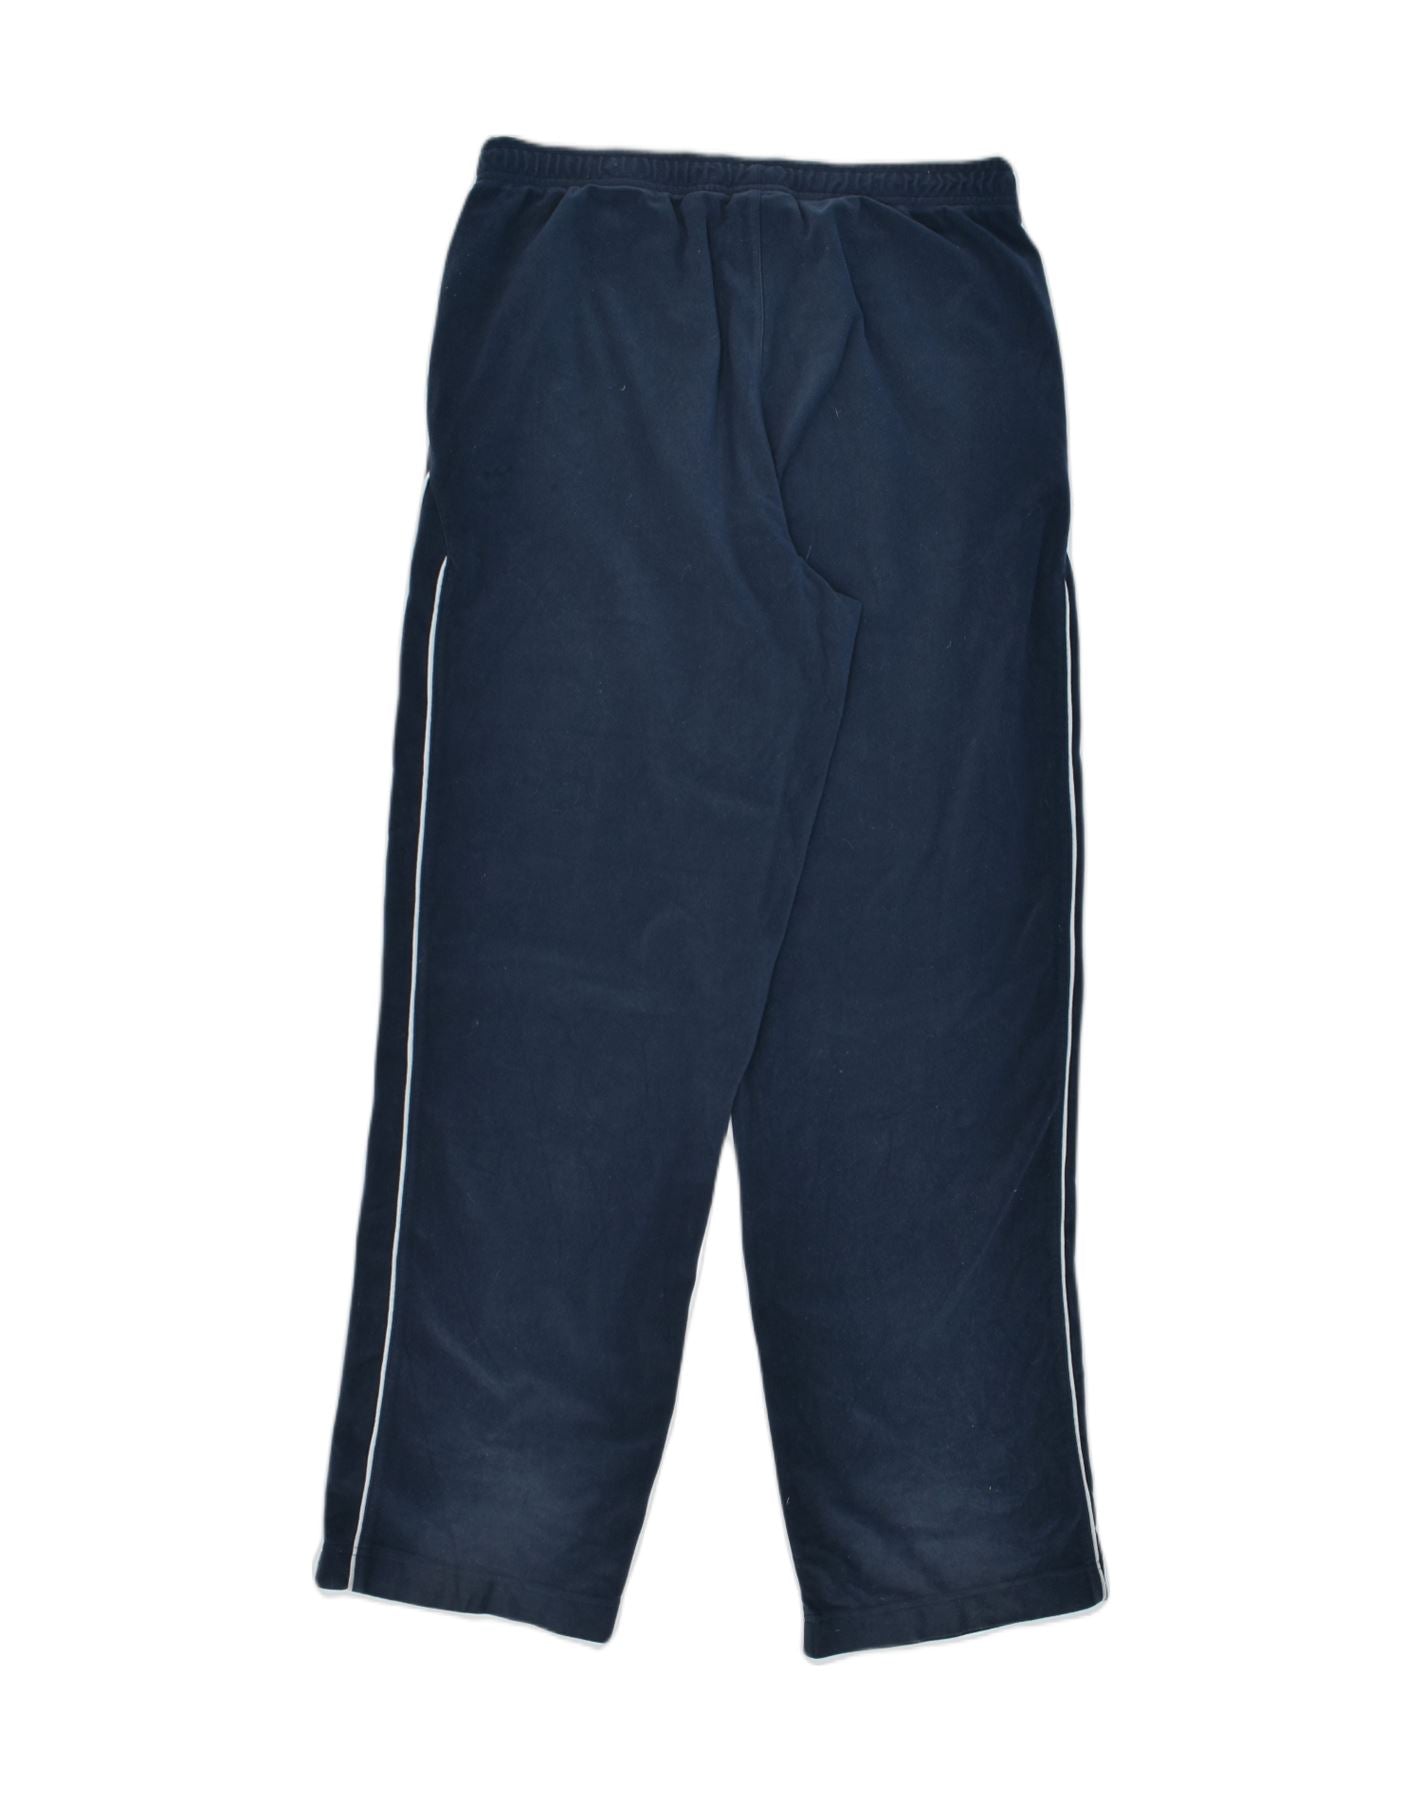 Lotto Mens Blue Polyester Jogger Trousers Size M L27 in Regular Drawst –  Preworn Ltd